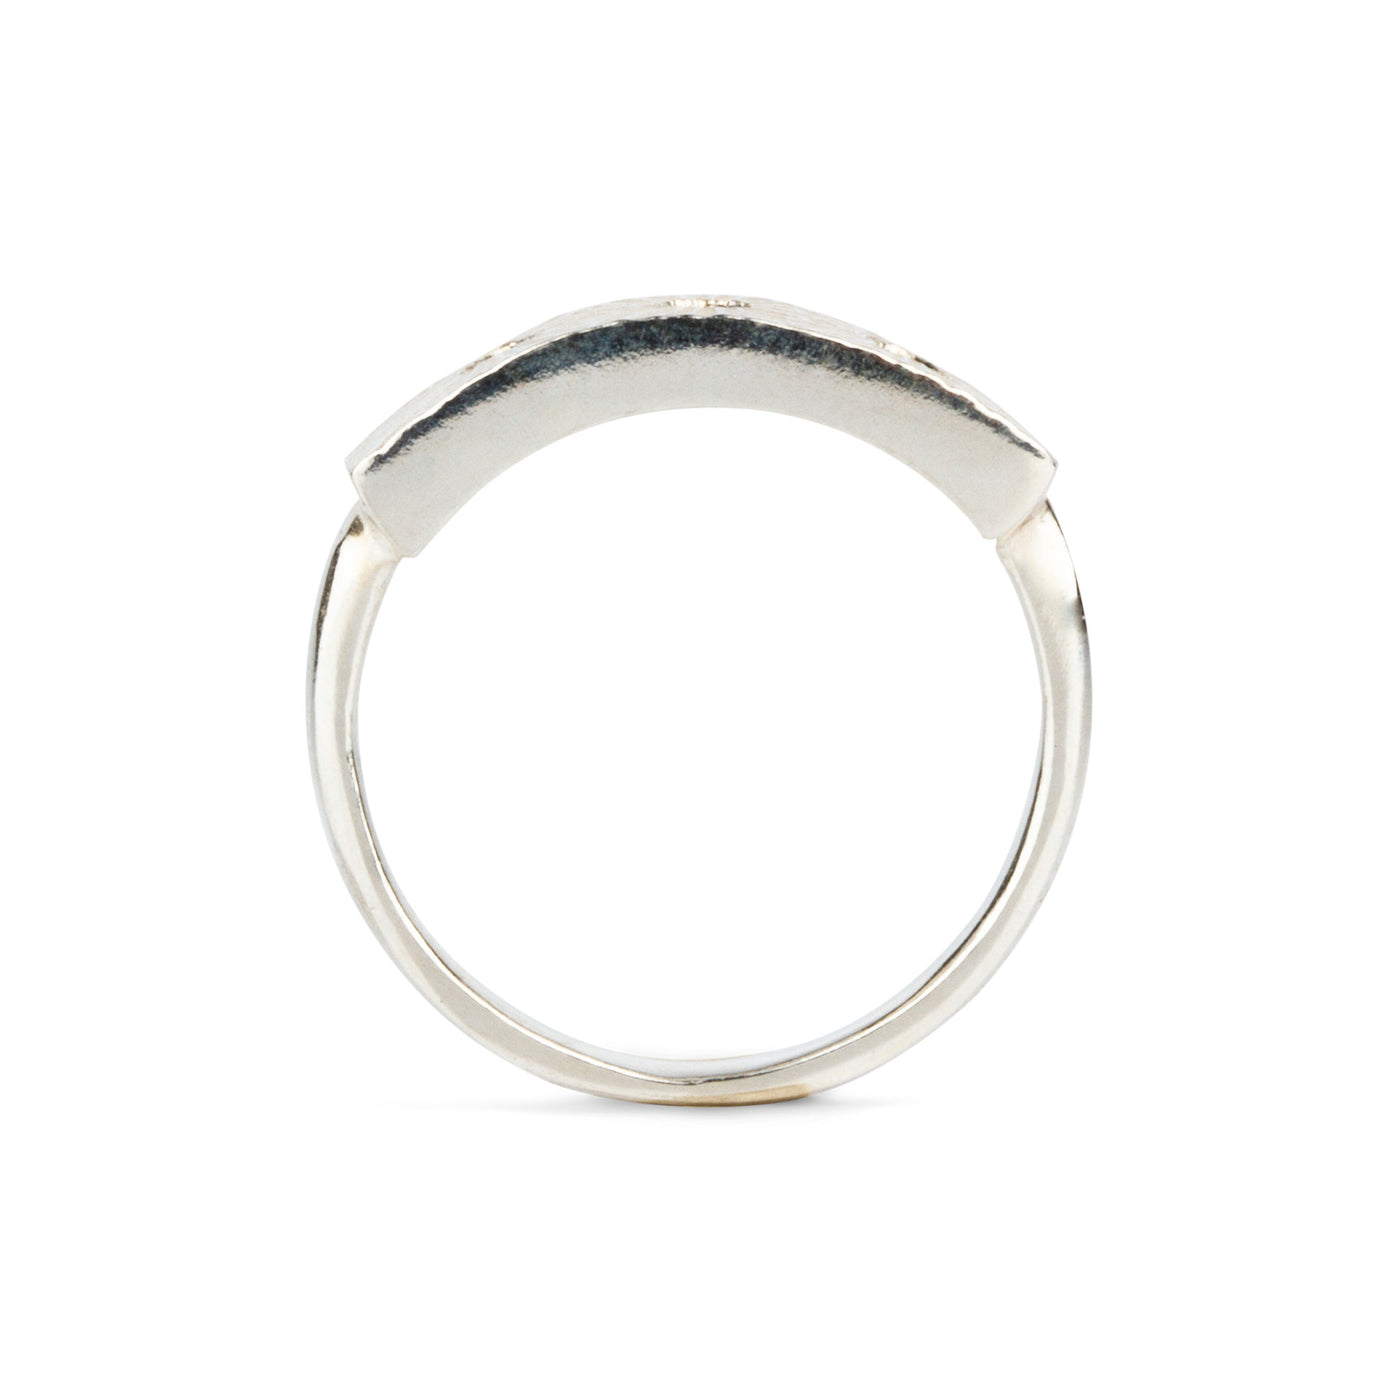 Nova Silver and Diamond Ring by Corey Egan